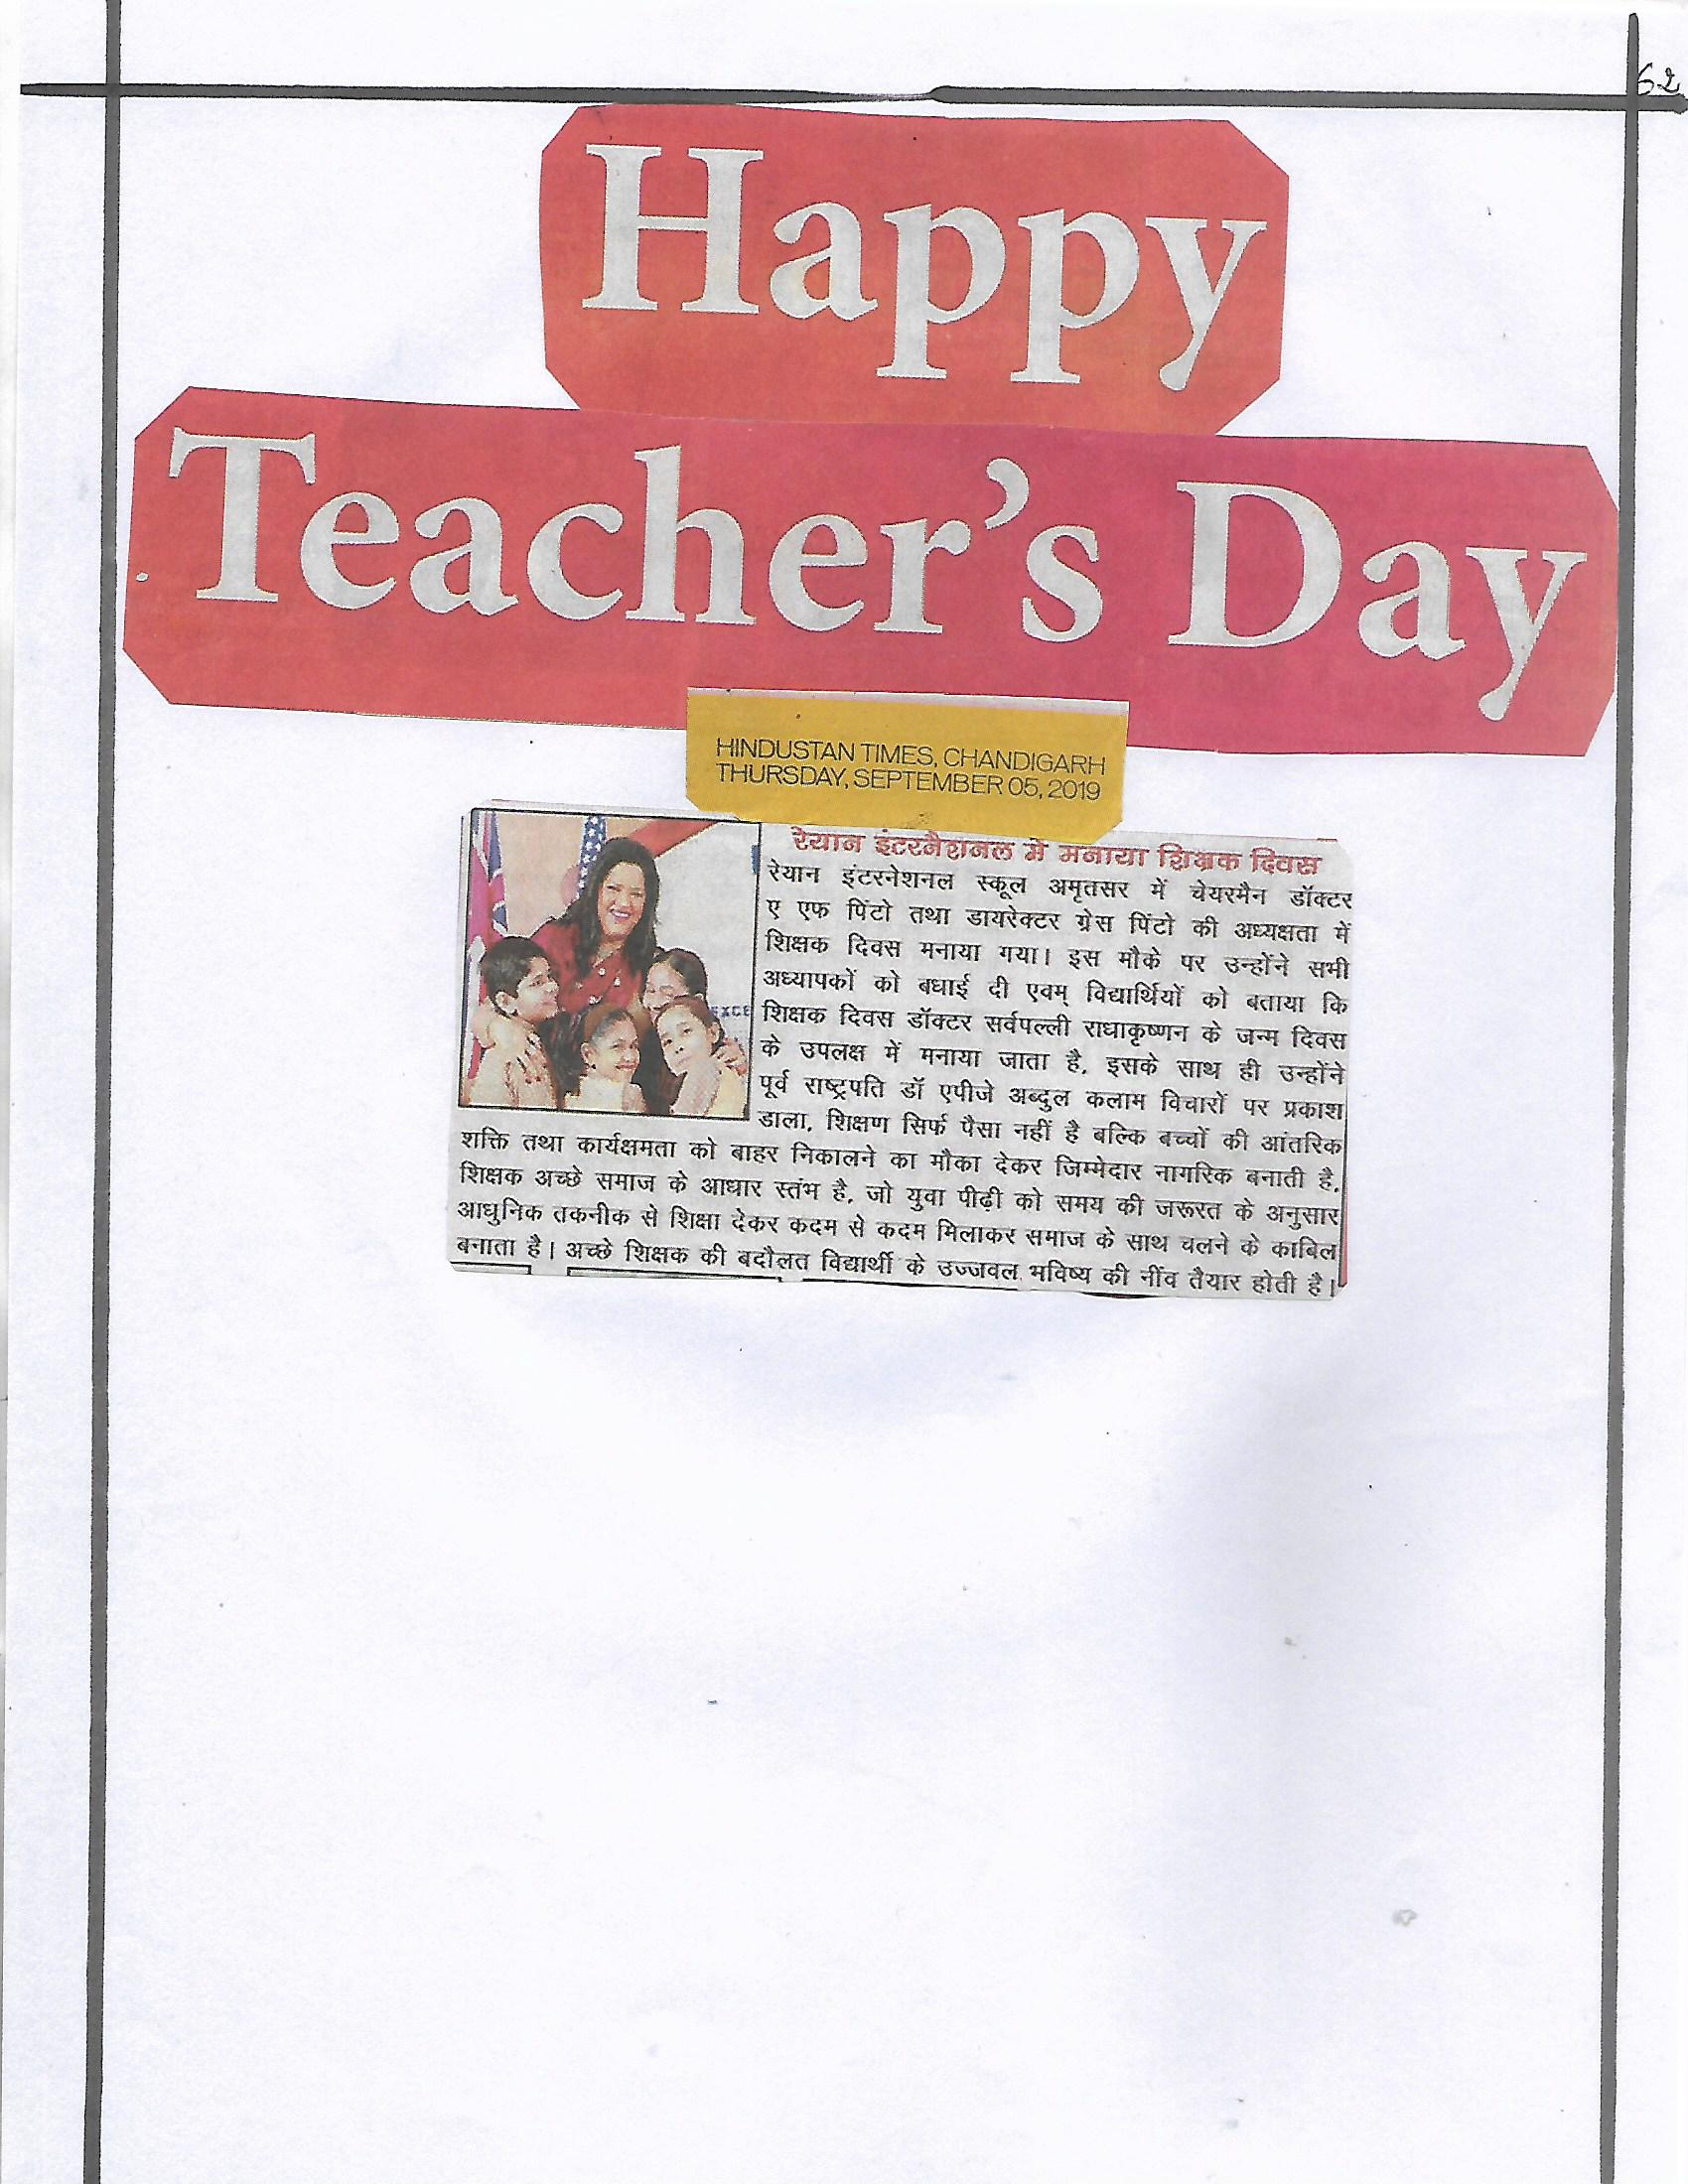 Teacher’s Day’ - Hindustan Times - Ryan International School, Amritsar